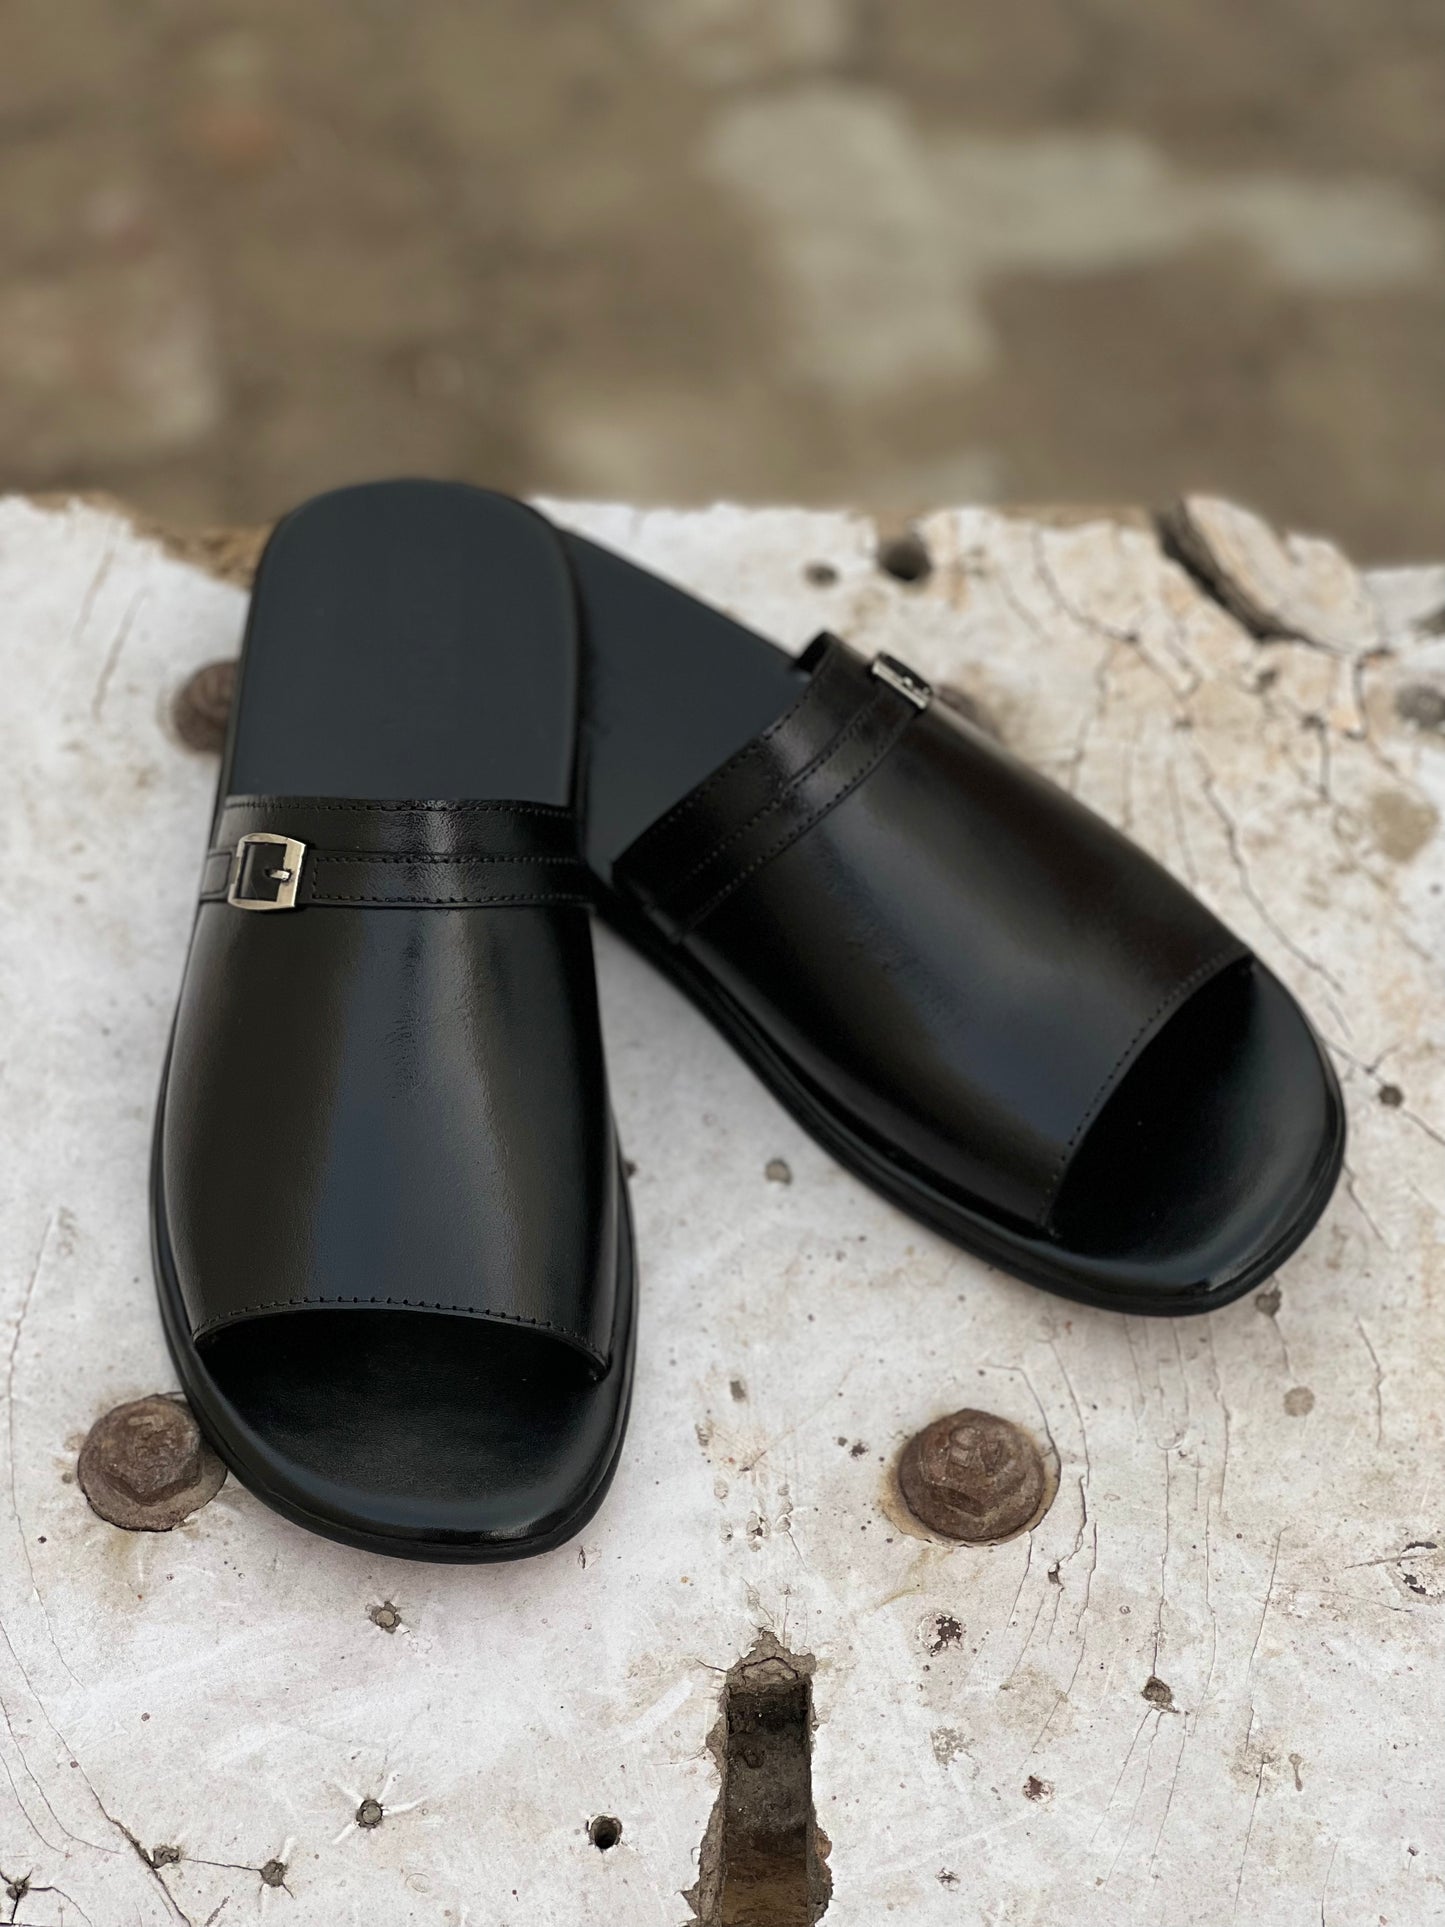 203-Black Premium Quality Chappal Pure Cow Leather Shoes Trending shoes